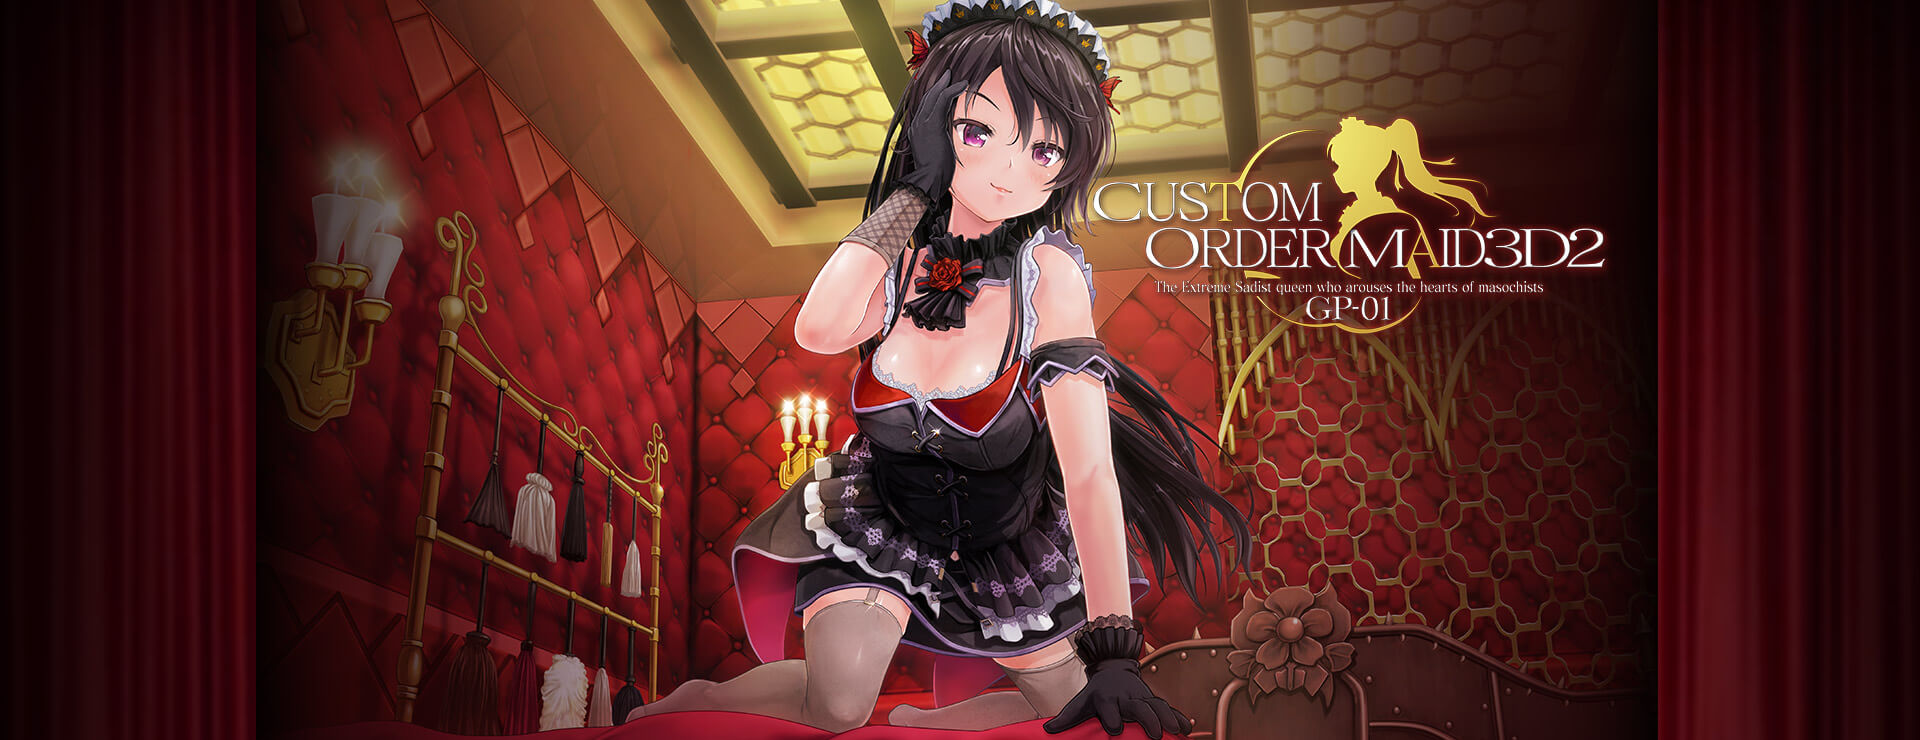 Custom Order Maid 3D2: Extreme Sadist Queen GP01 DLC - Symulacja Gra